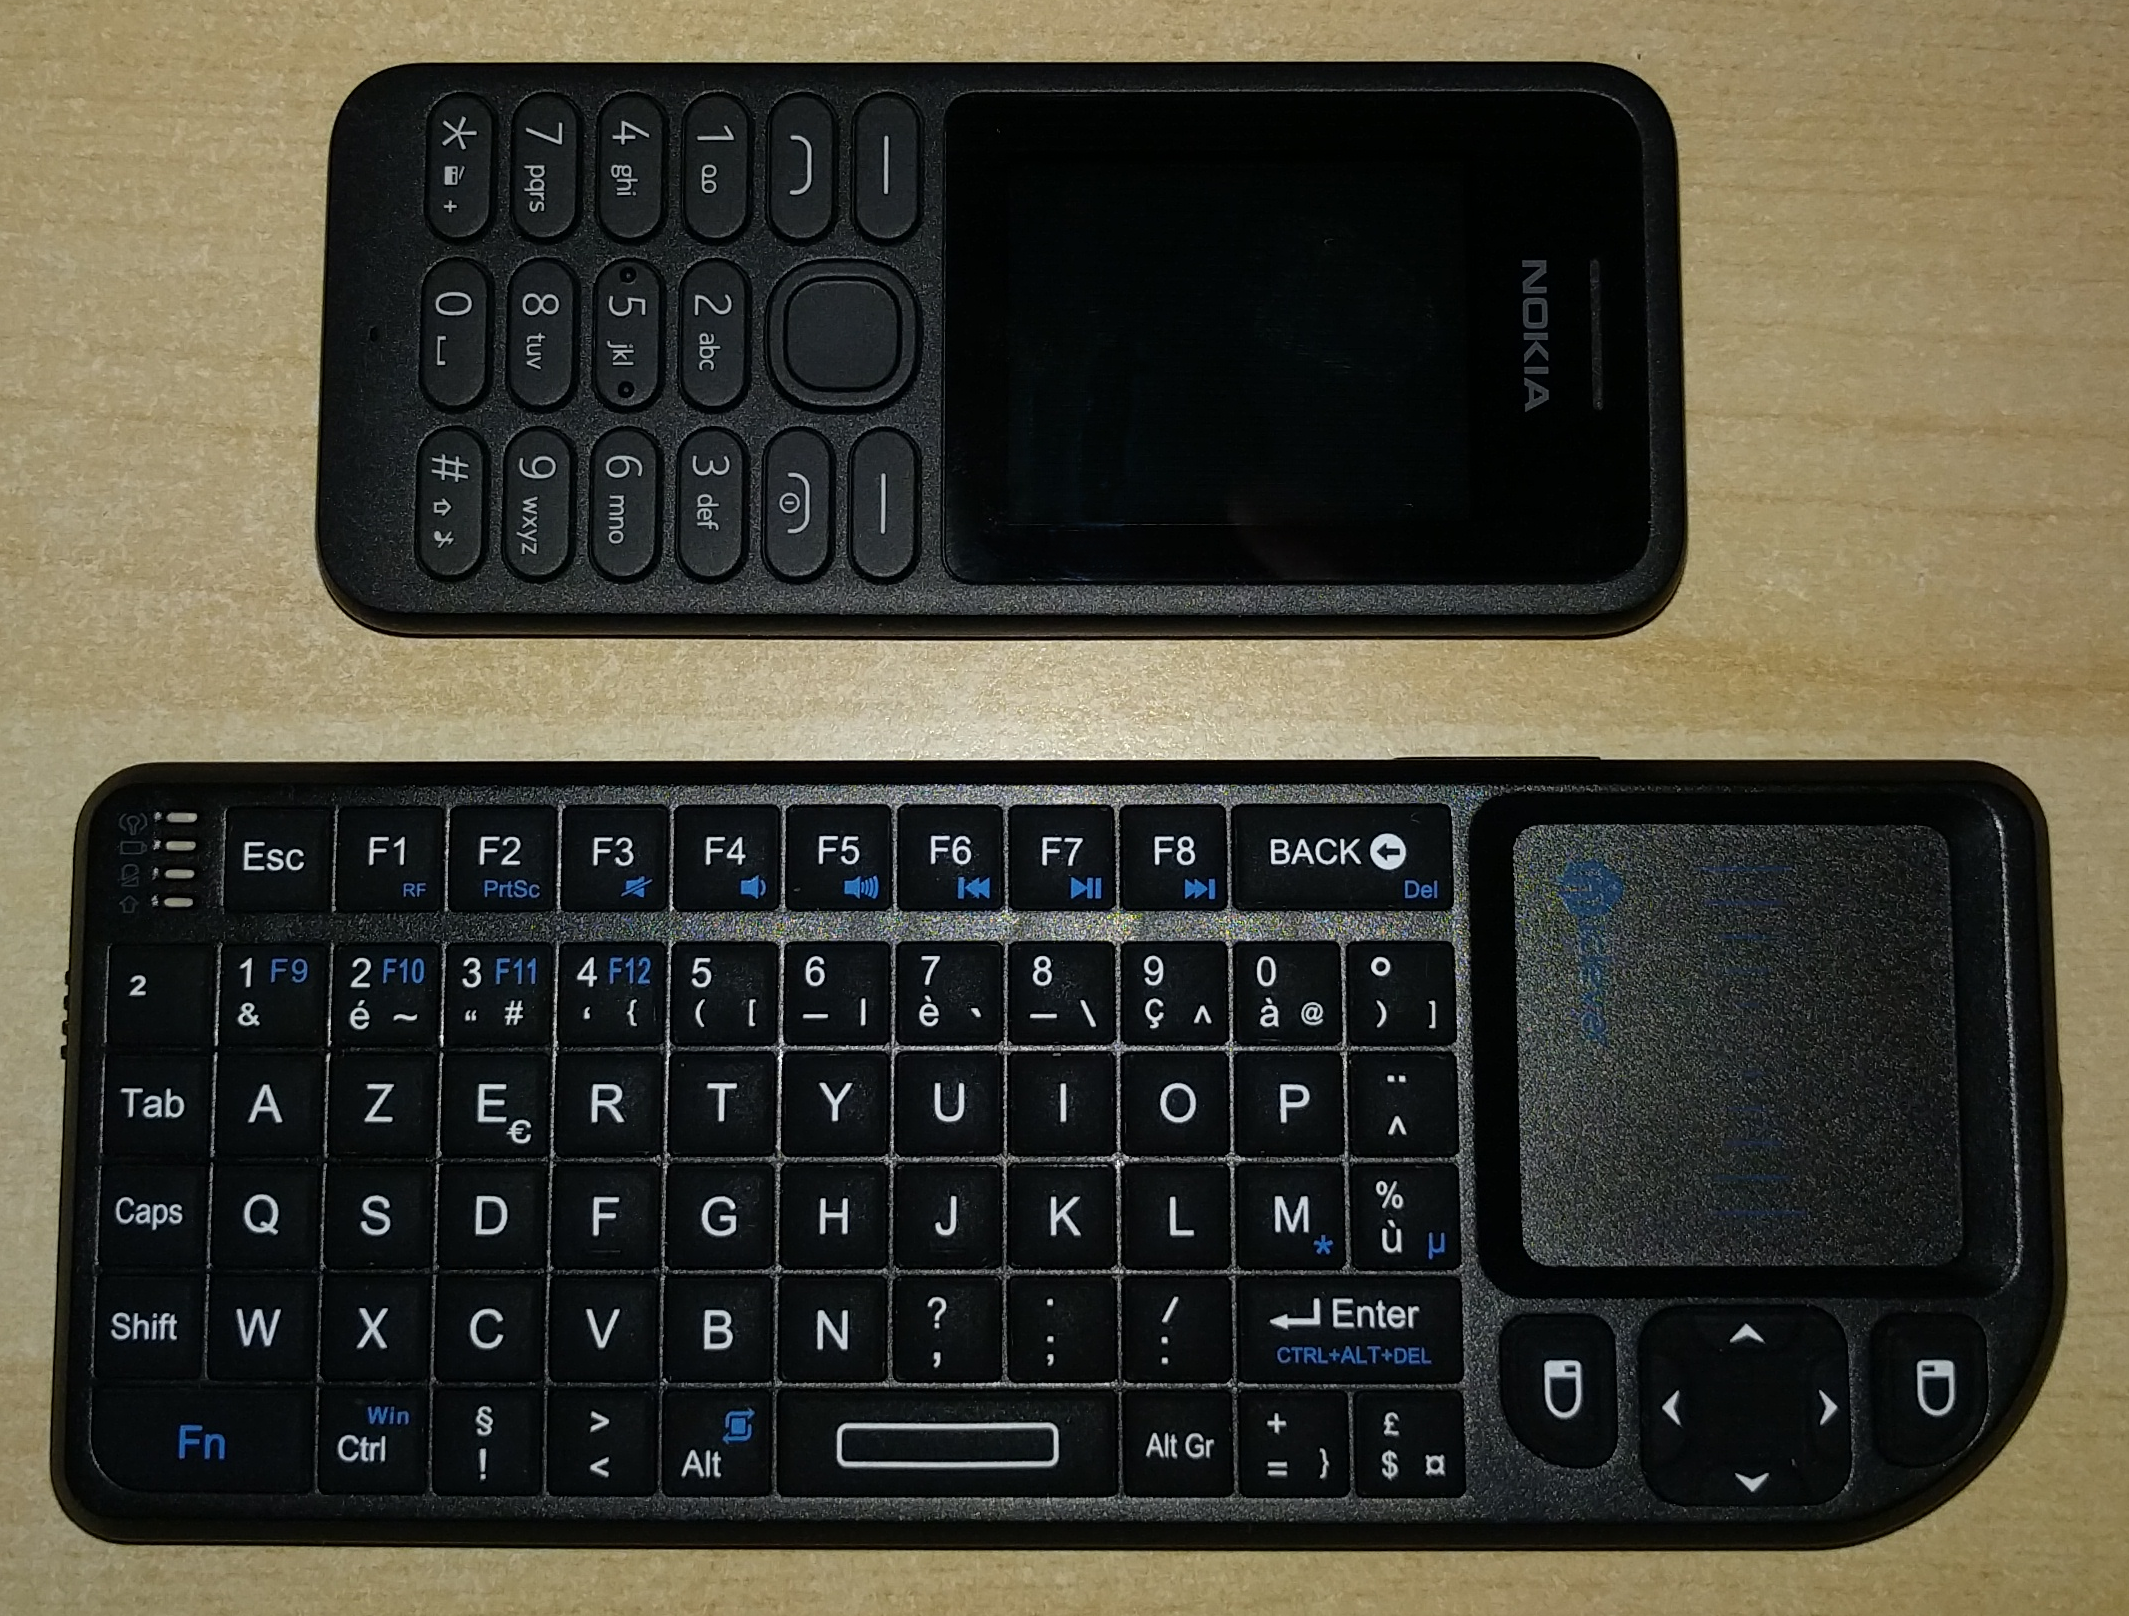 IF-RF01 vs Nokia 130